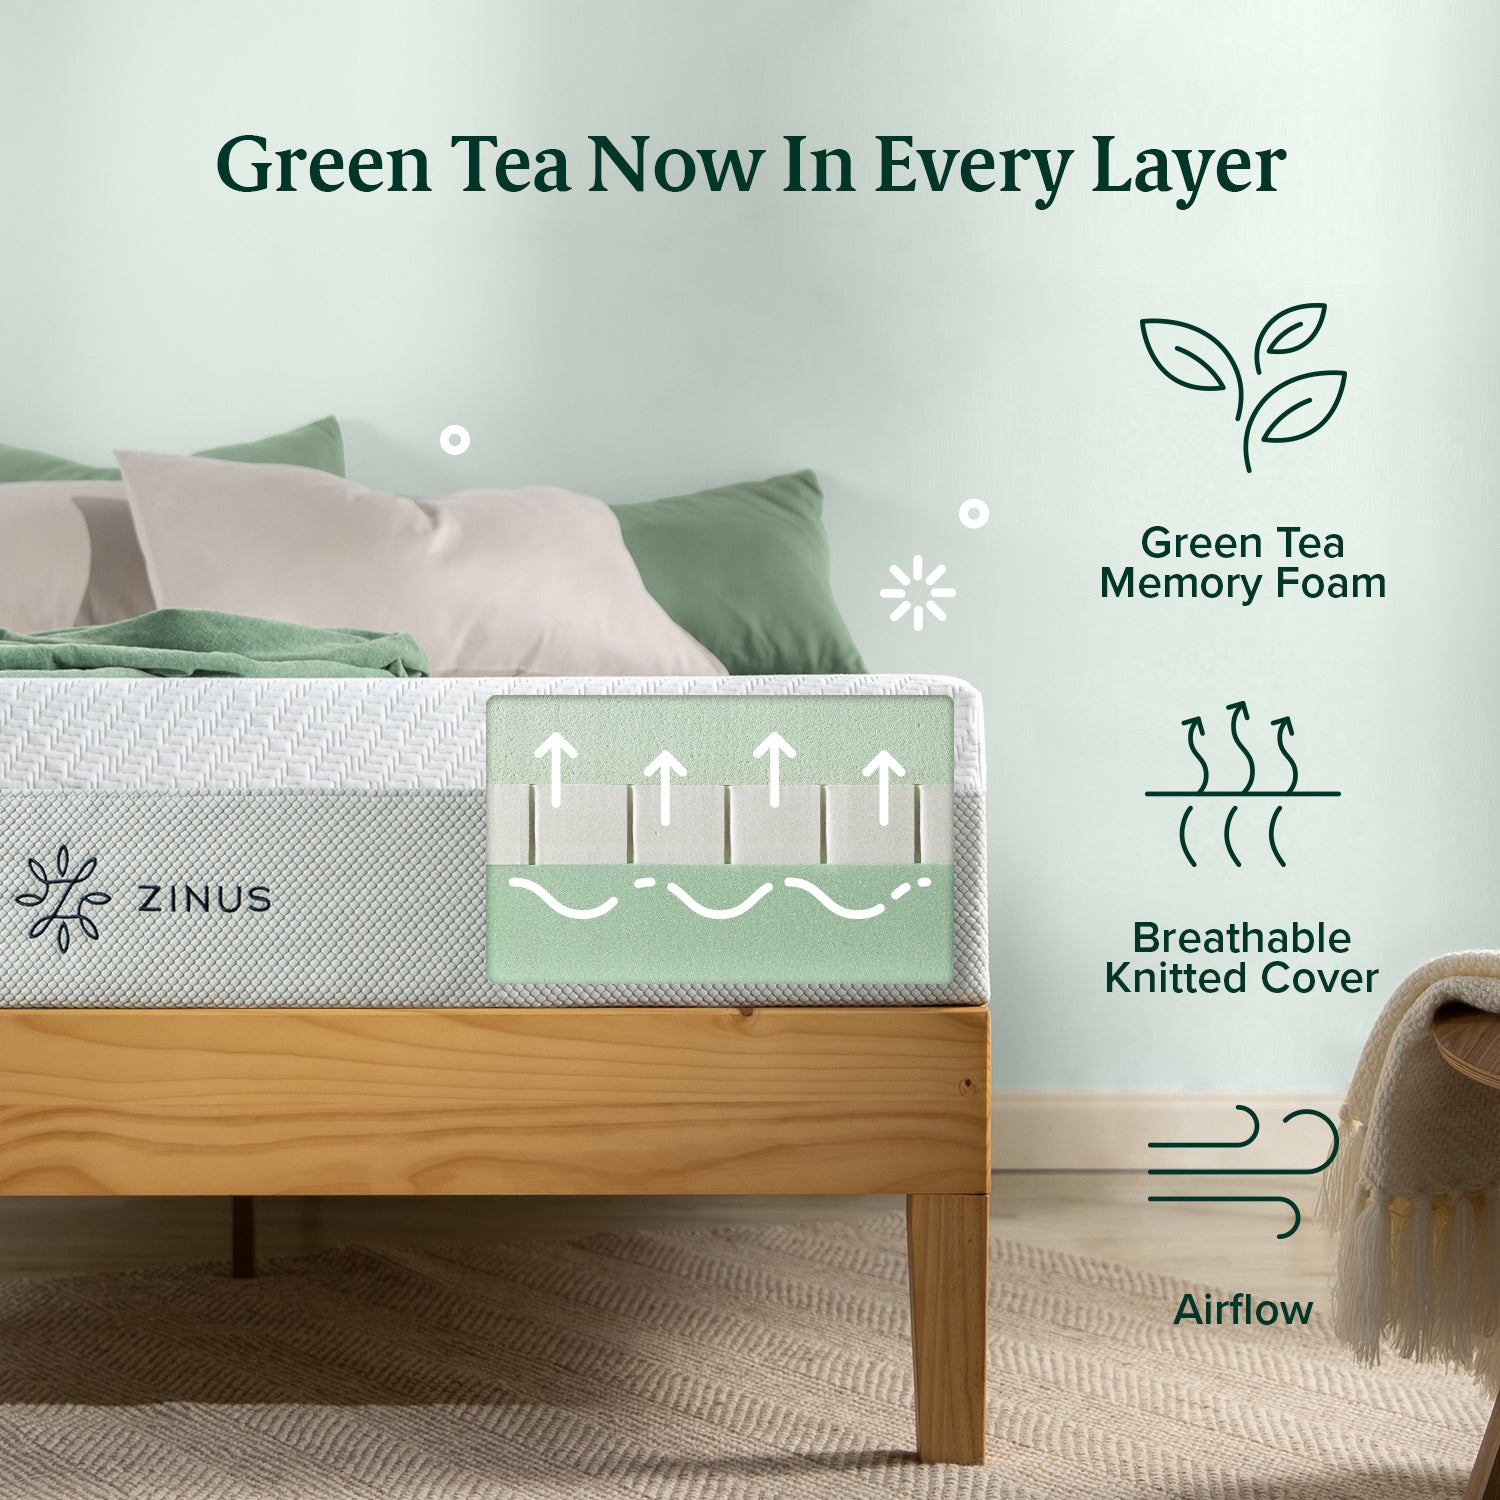 Green Tea Luxe Memory Foam Mattress